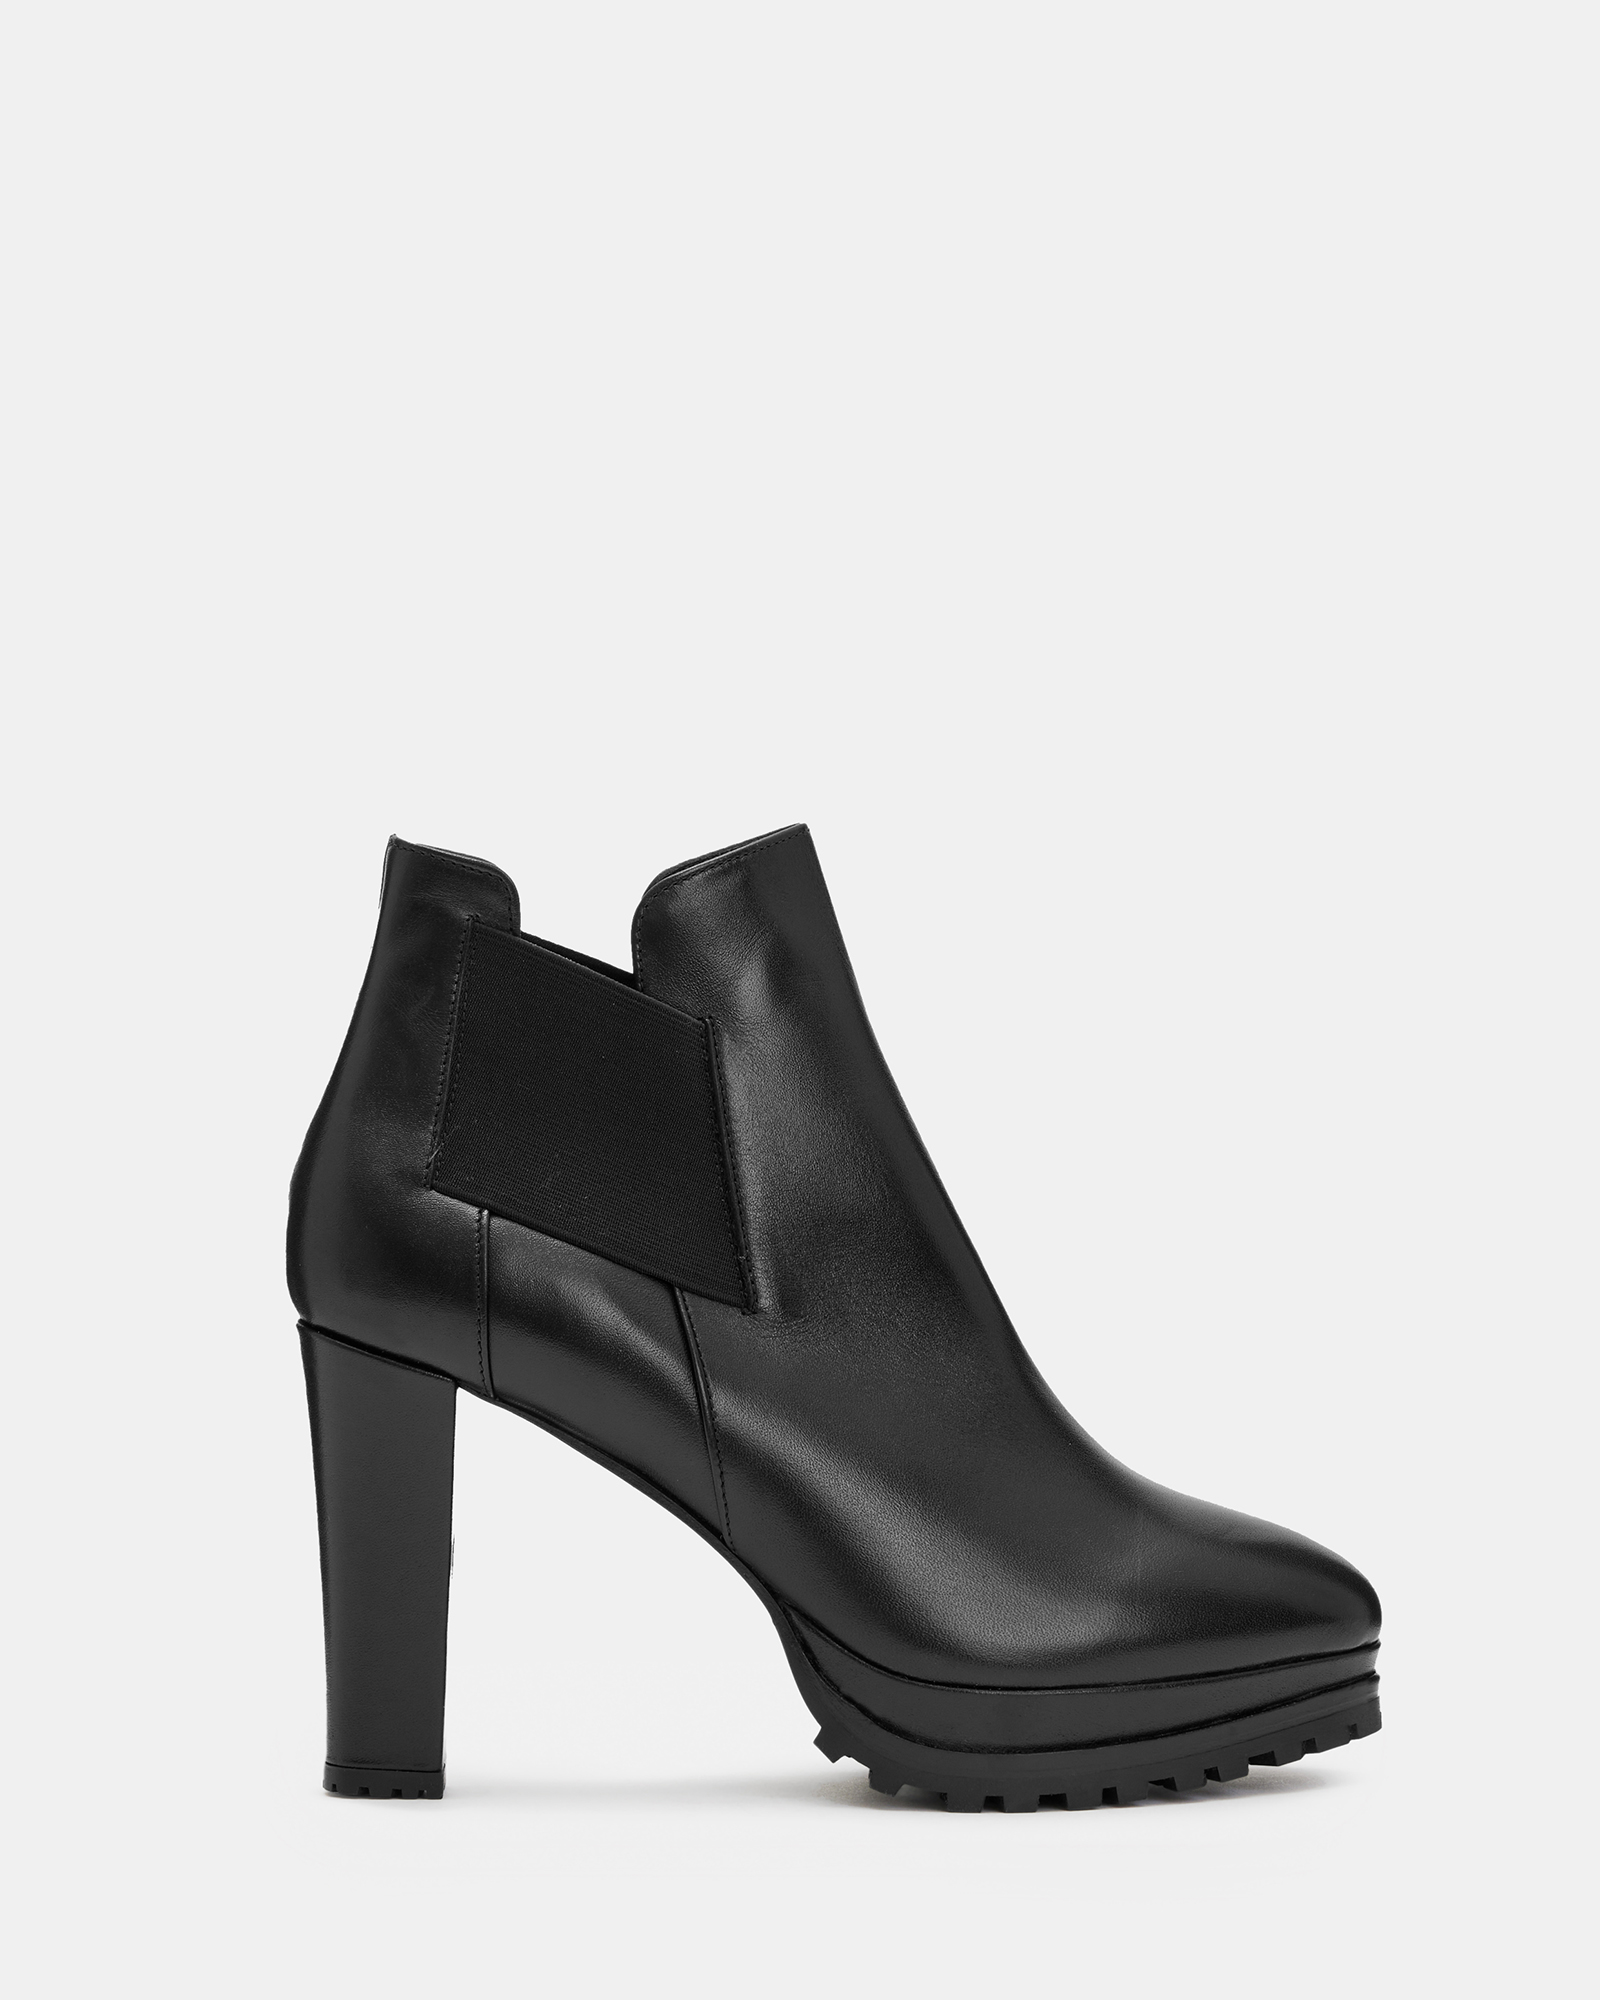 Allsaints Sarris Heeled Leather Boots,, Black, Size: Uk 3/Us 6/Eu 36